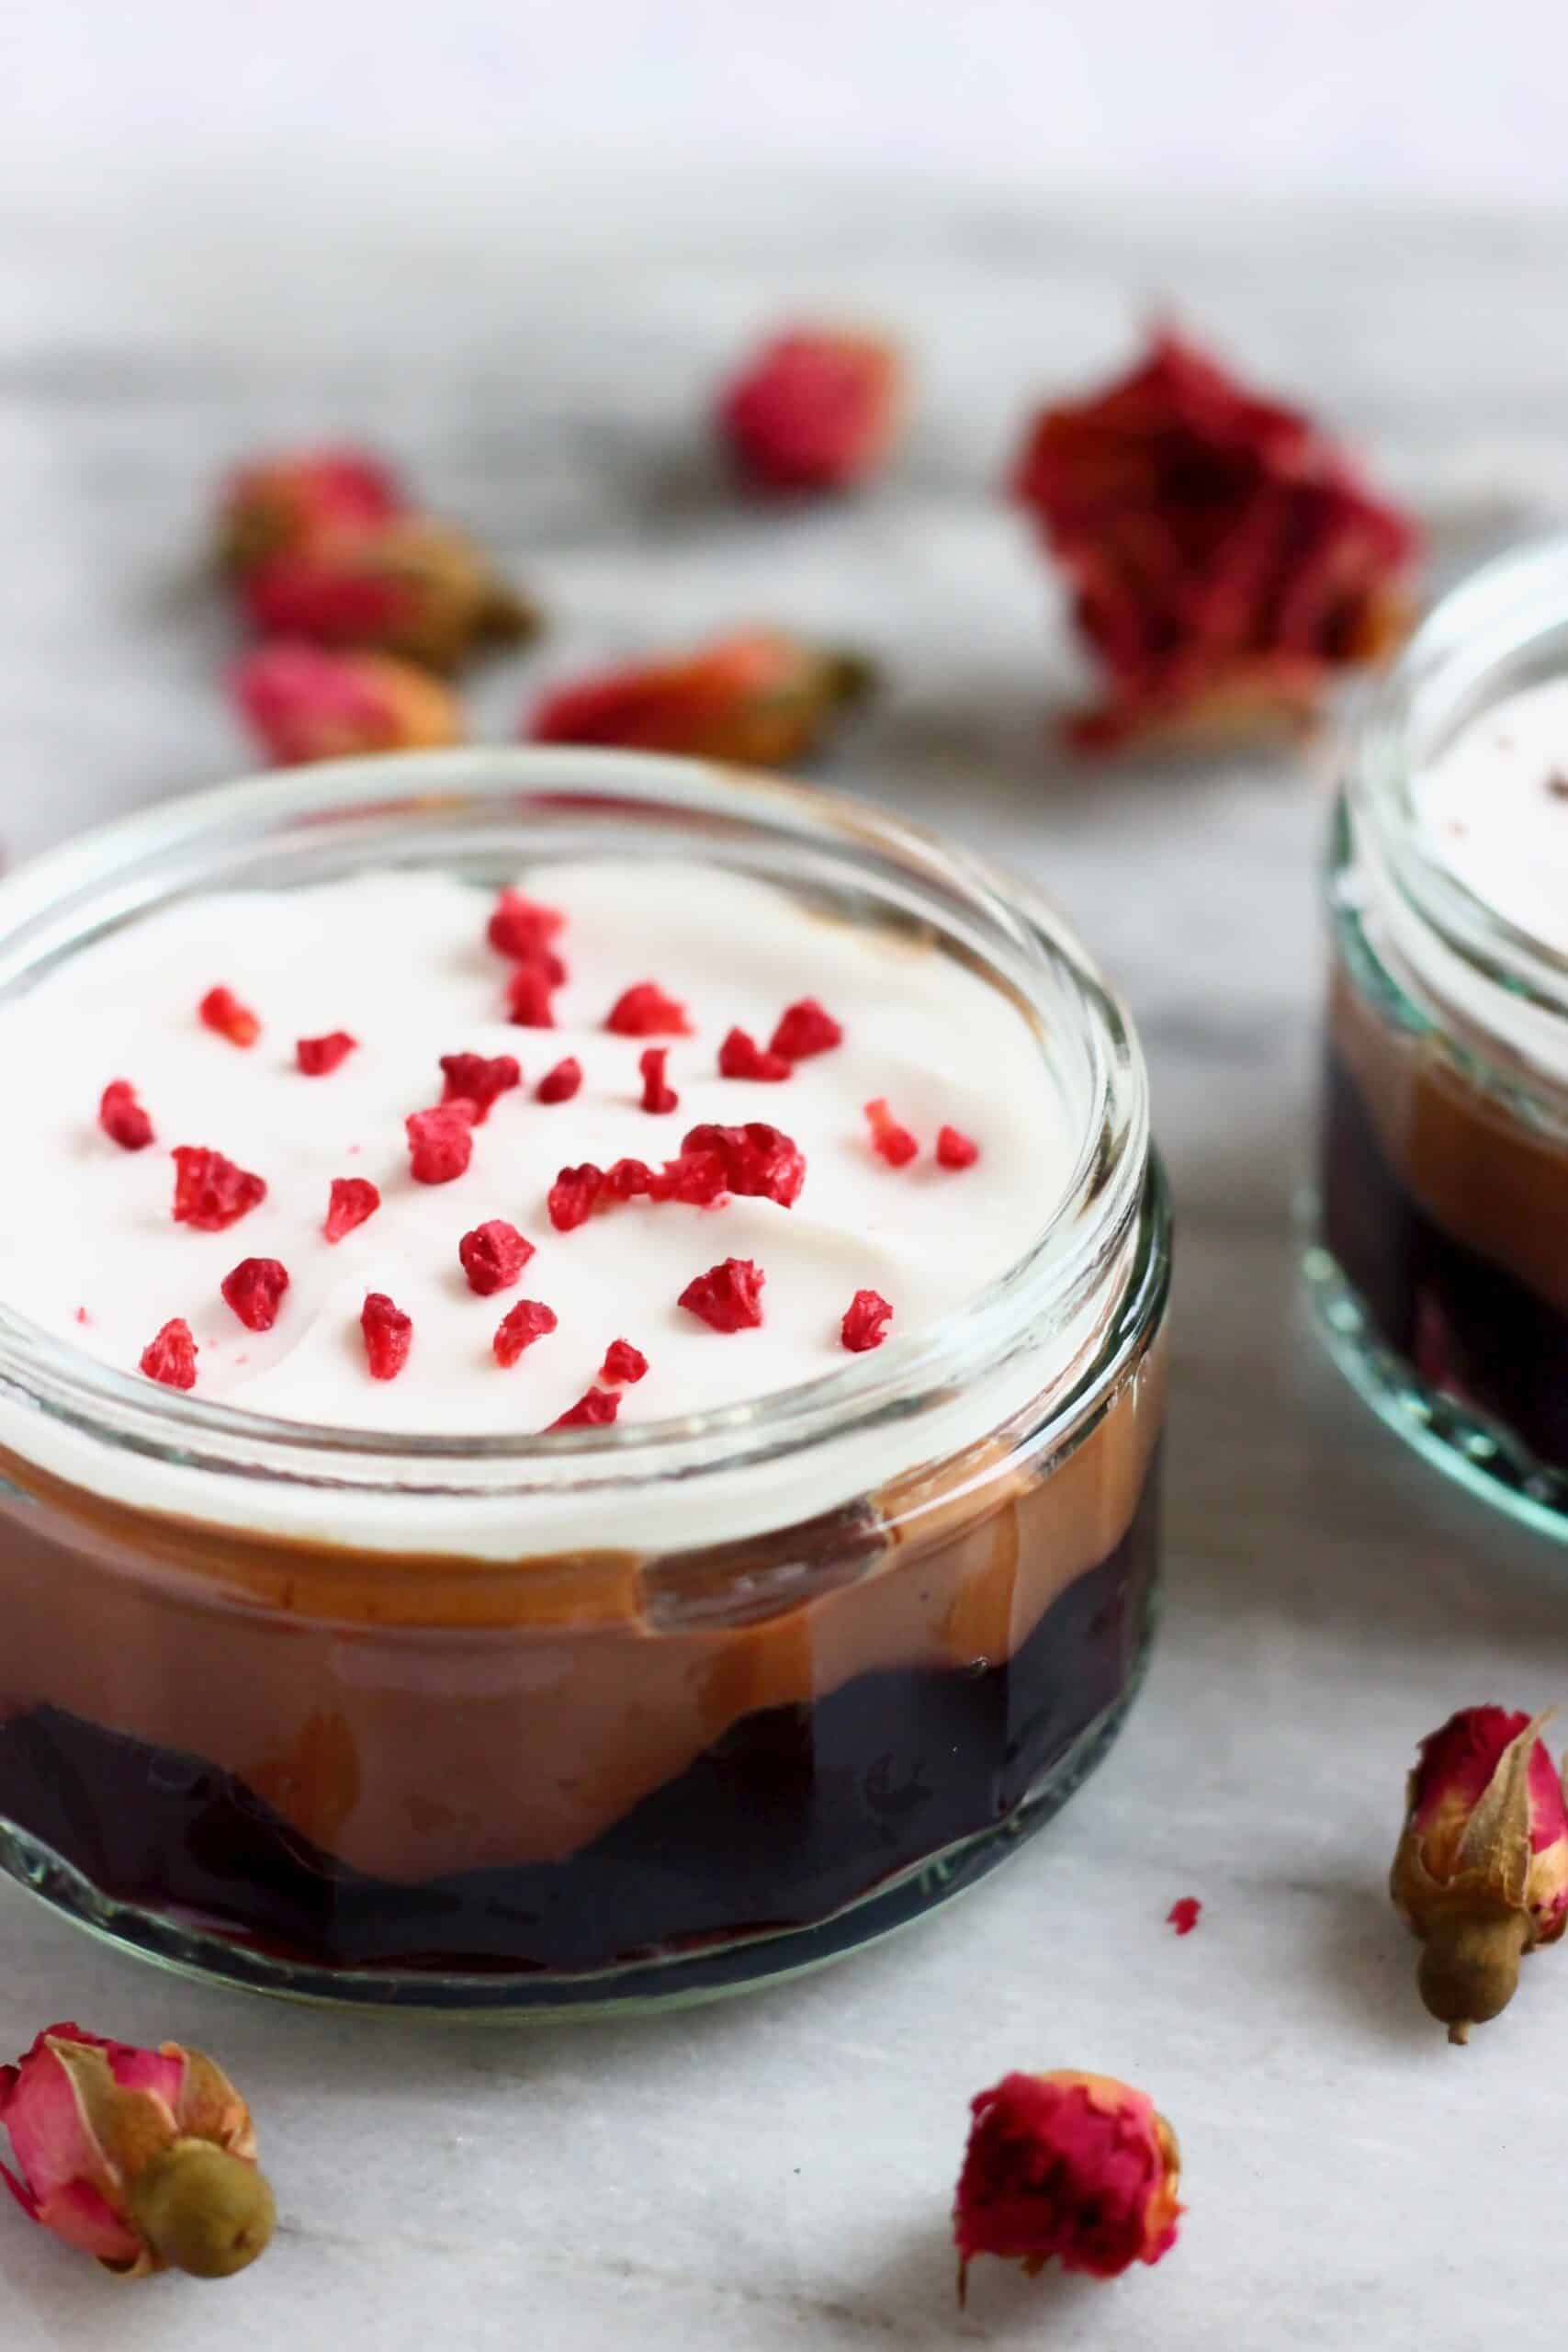 A gluten-free vegan chocolate cherry trifle in a glass pot